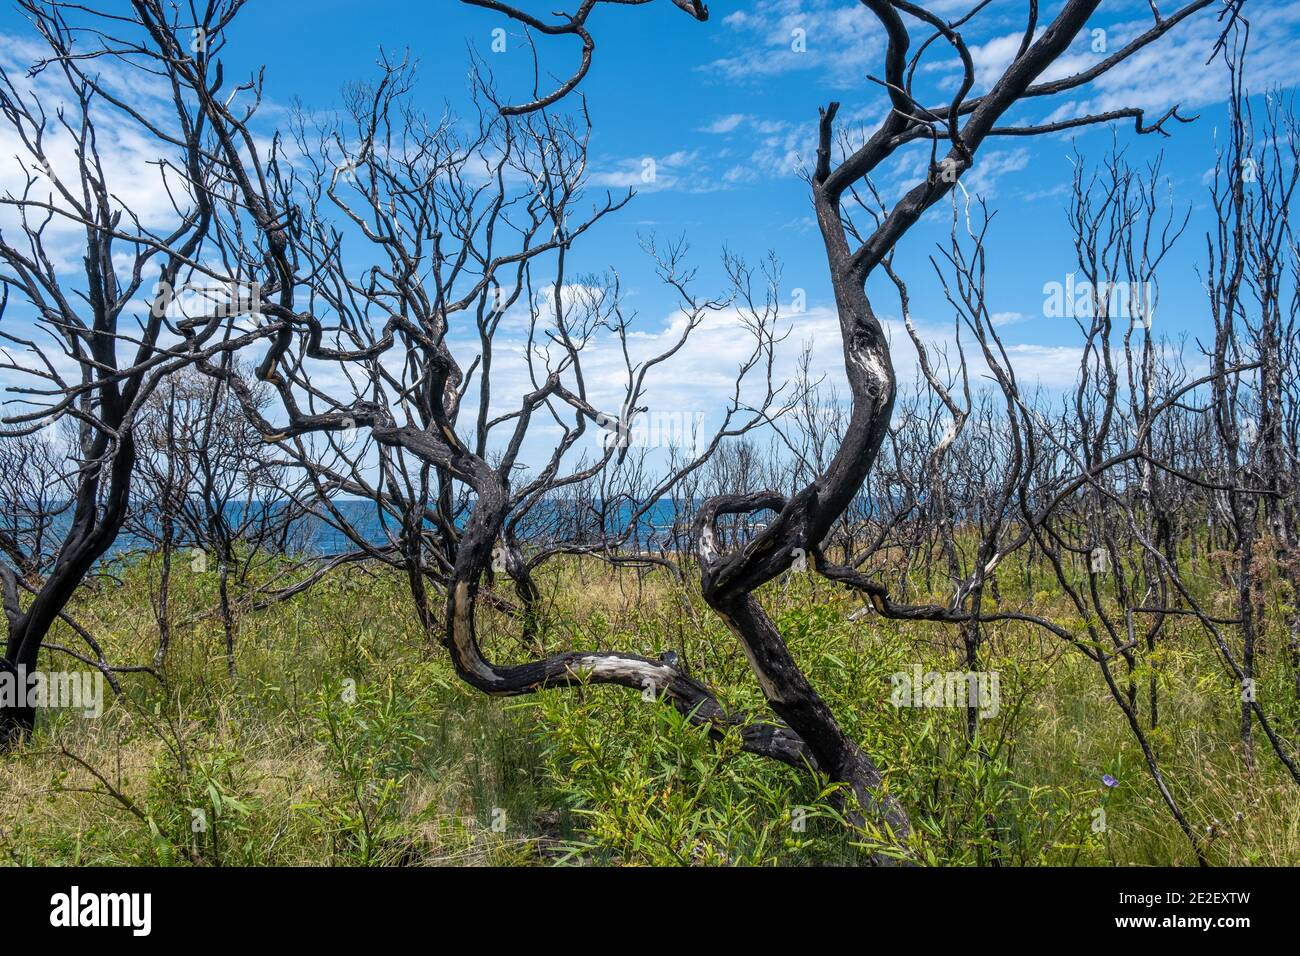 Burned coastal vegetation in Australia after bush fires Stock Photo